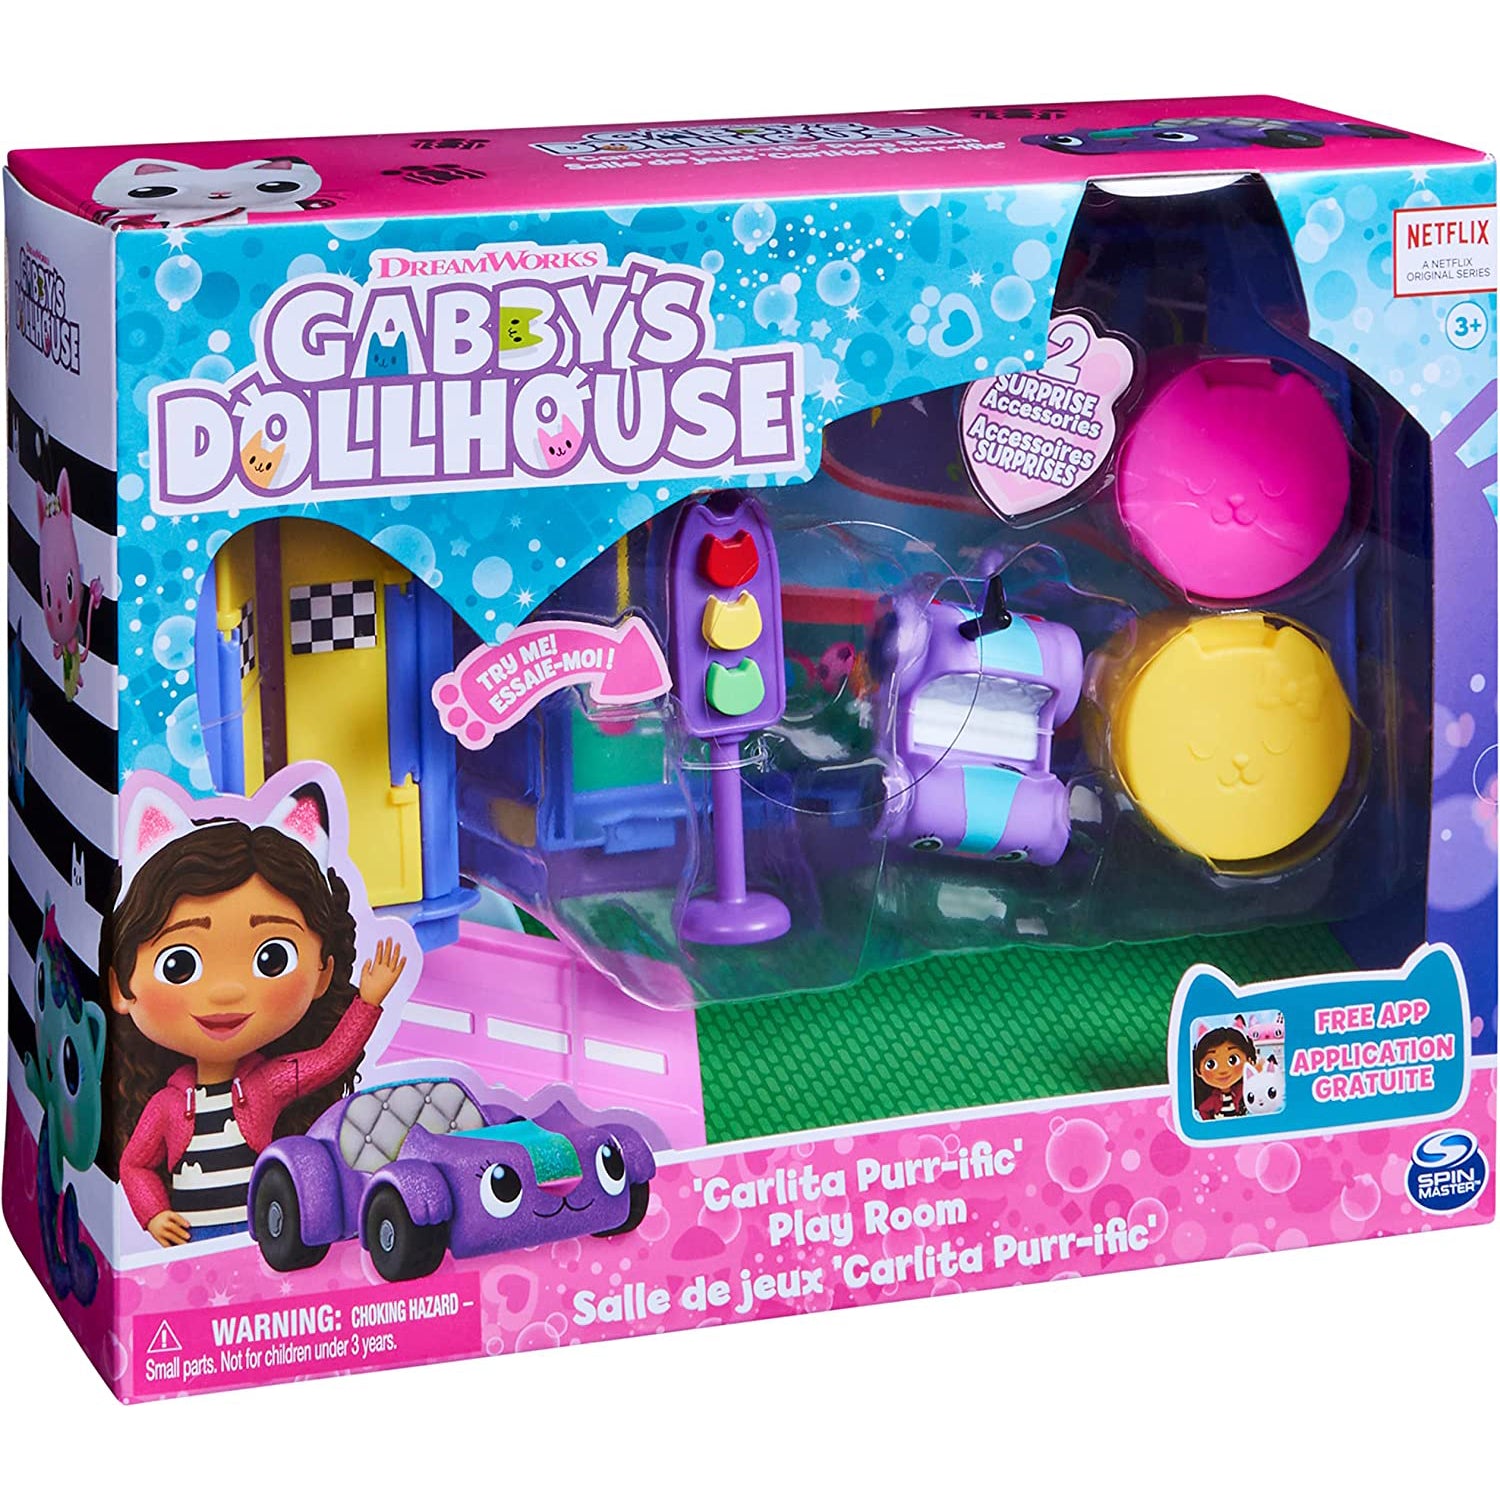 Gabby's Dollhouse - Carlita Purr-ific Play Room